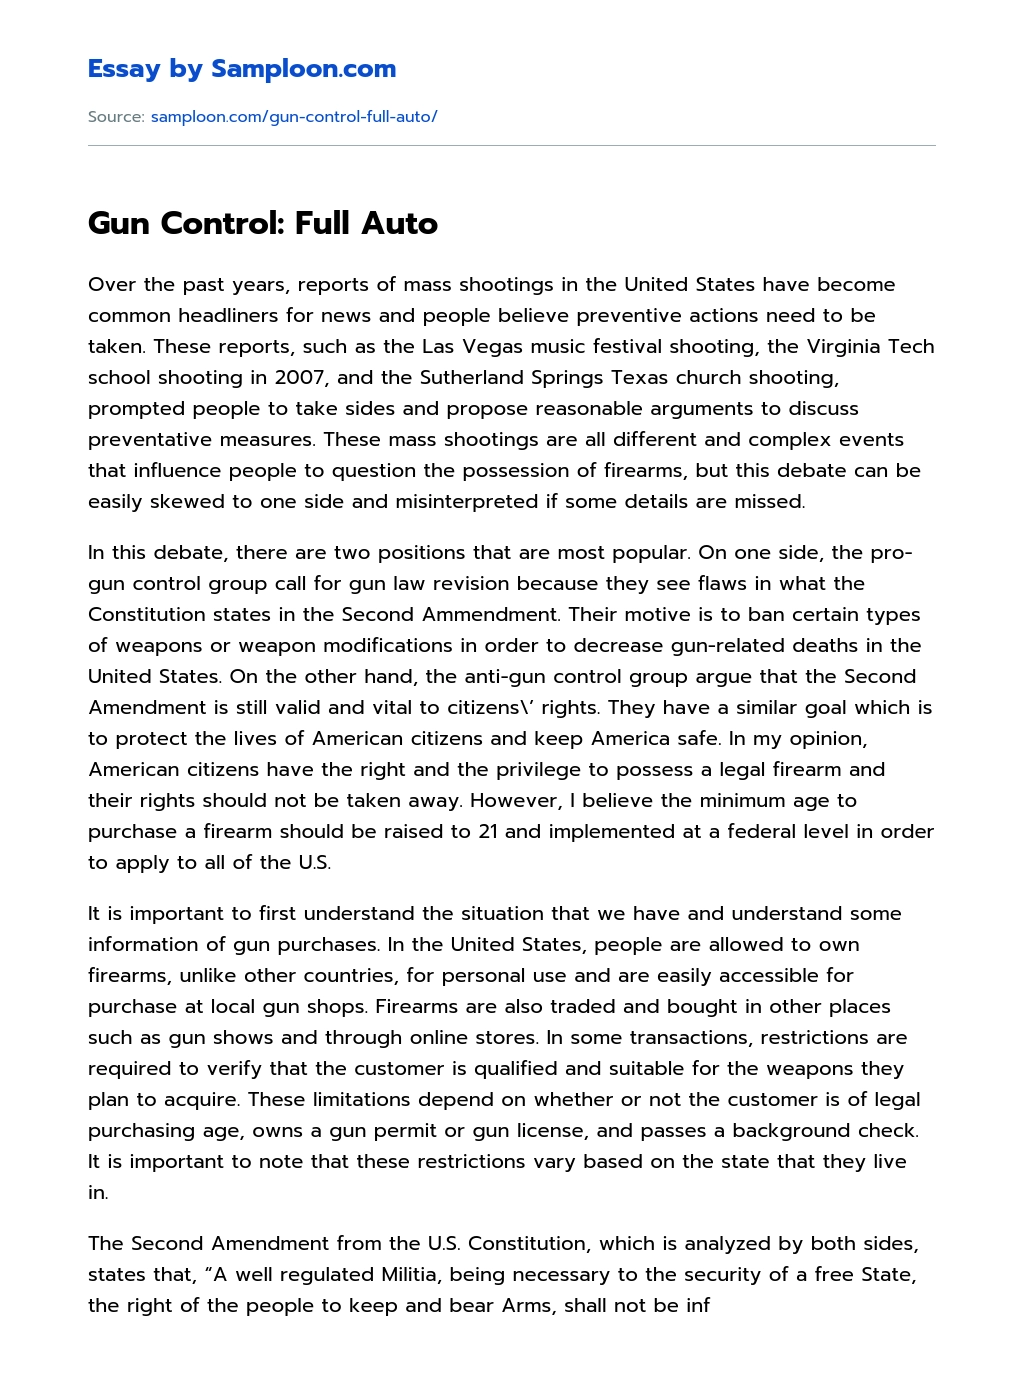 Gun Control: Full Auto essay